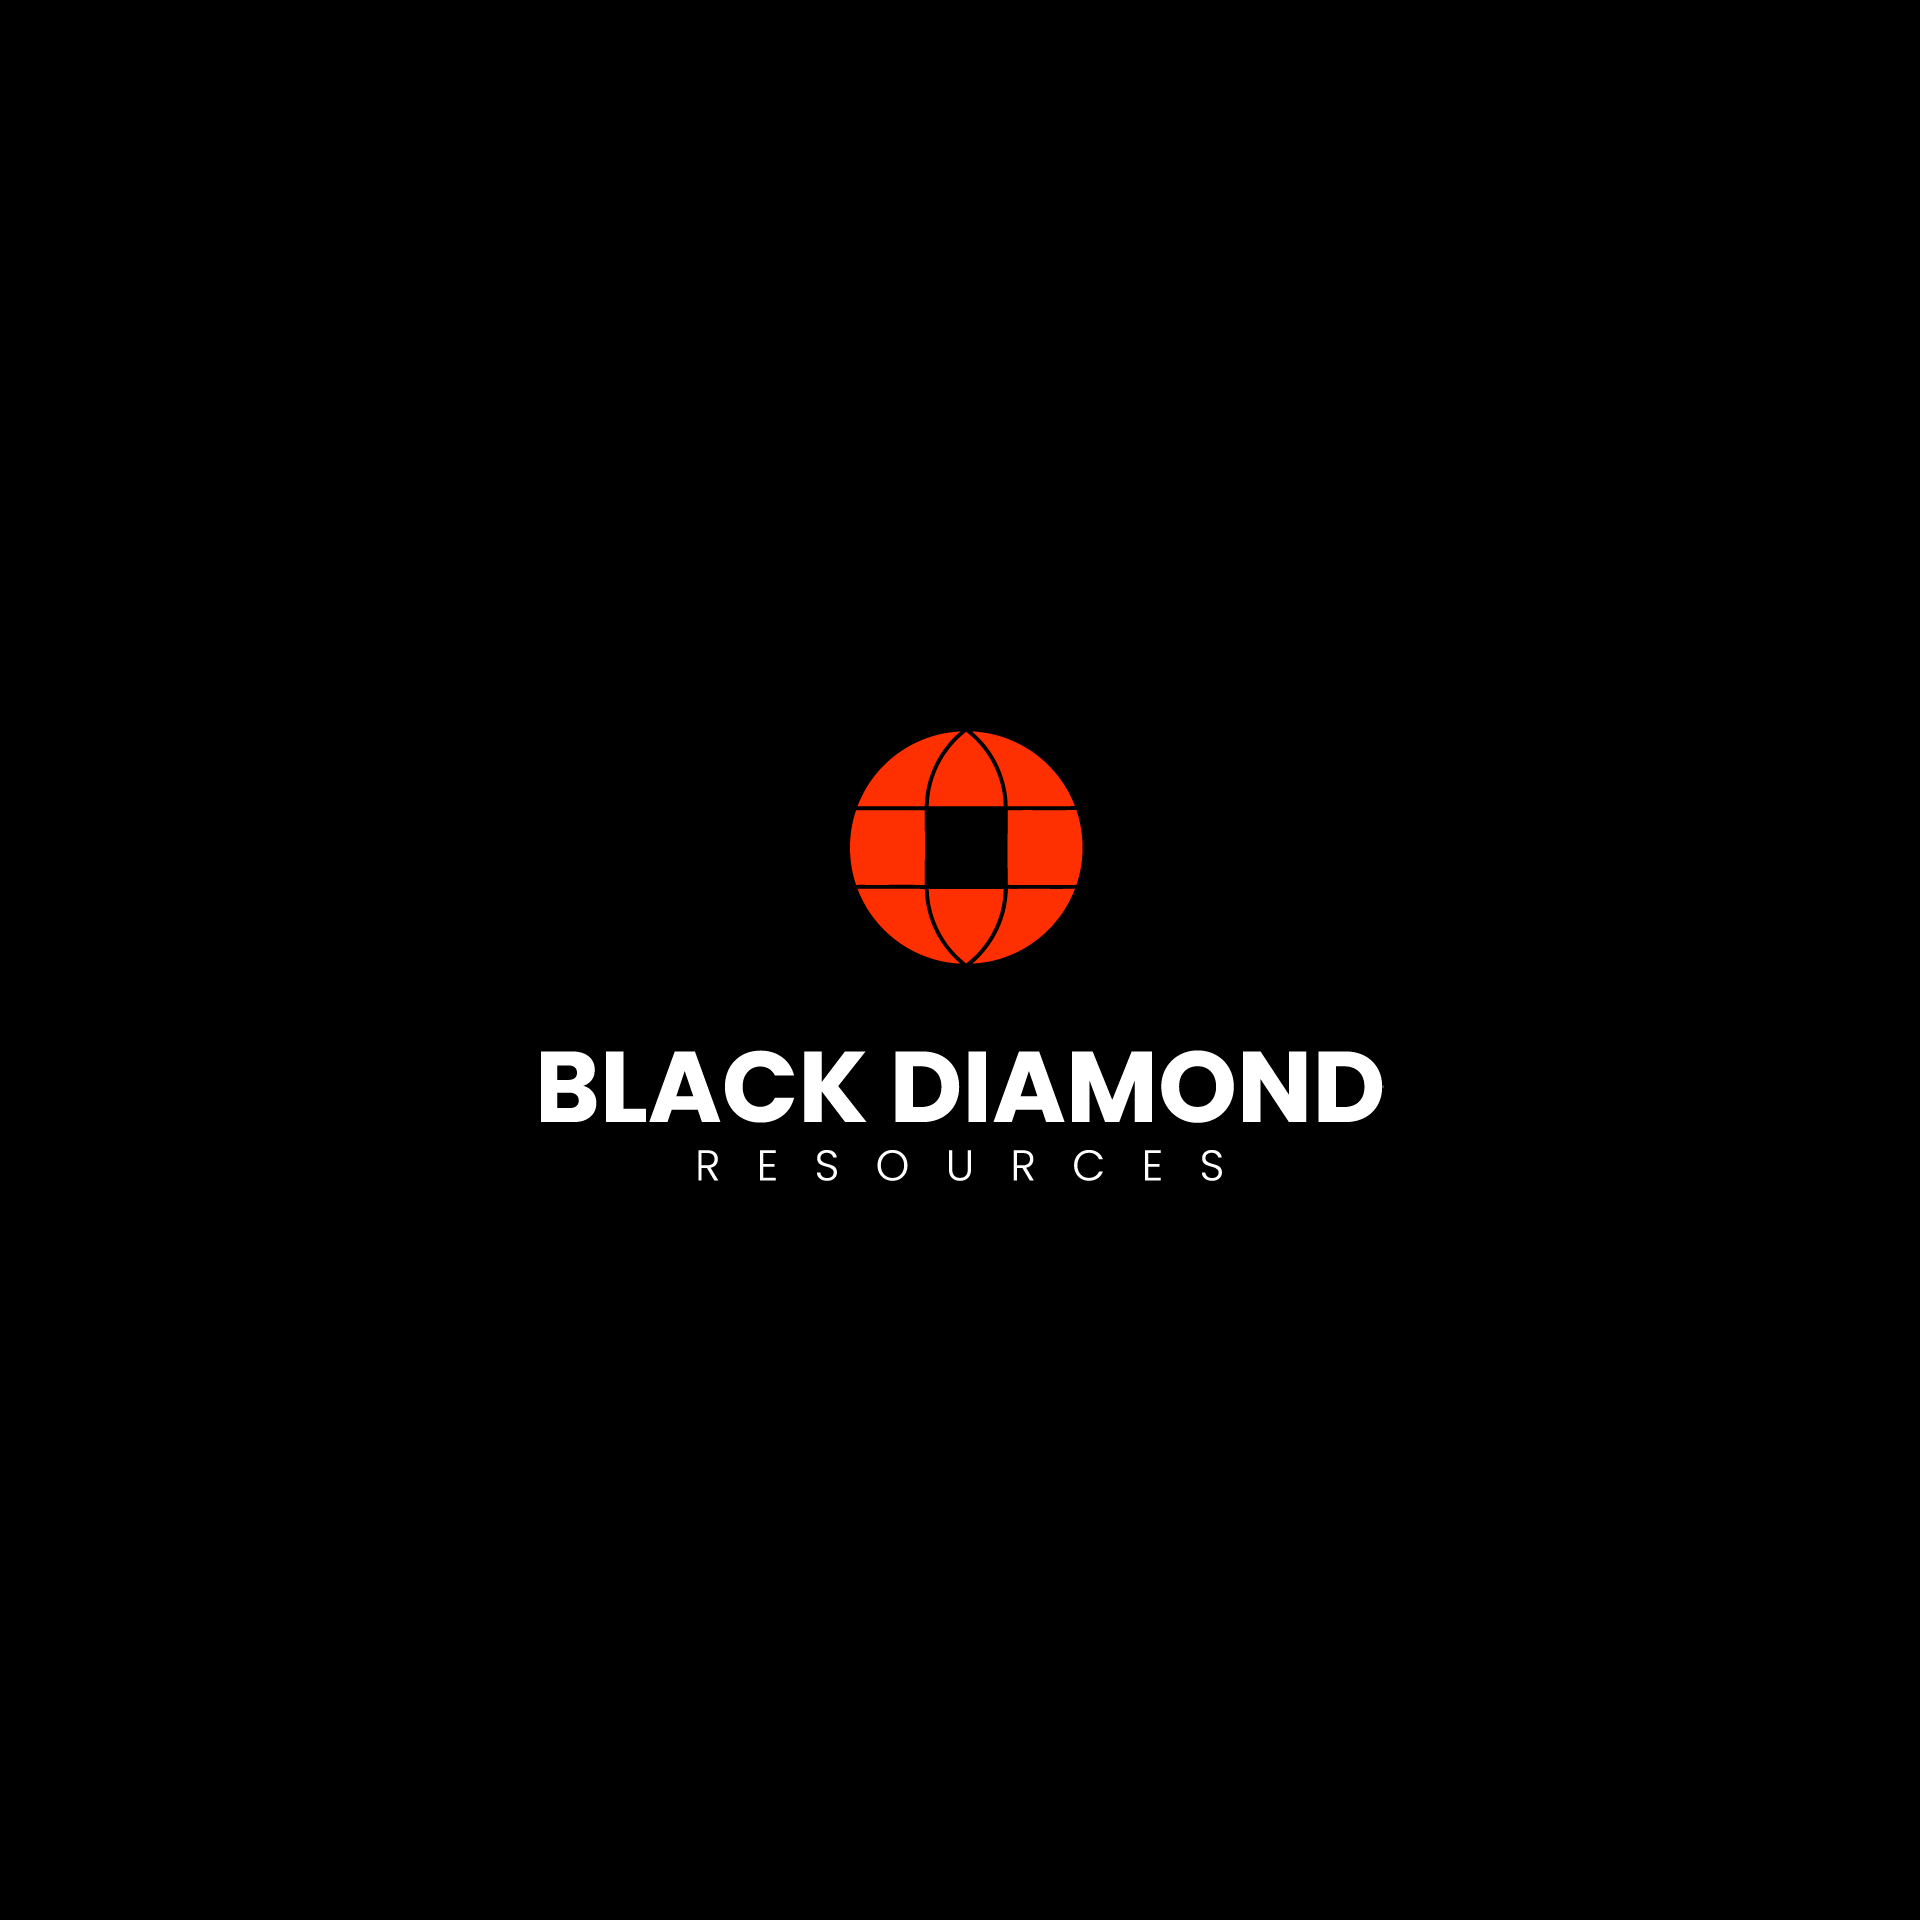 Black Diamond Resources